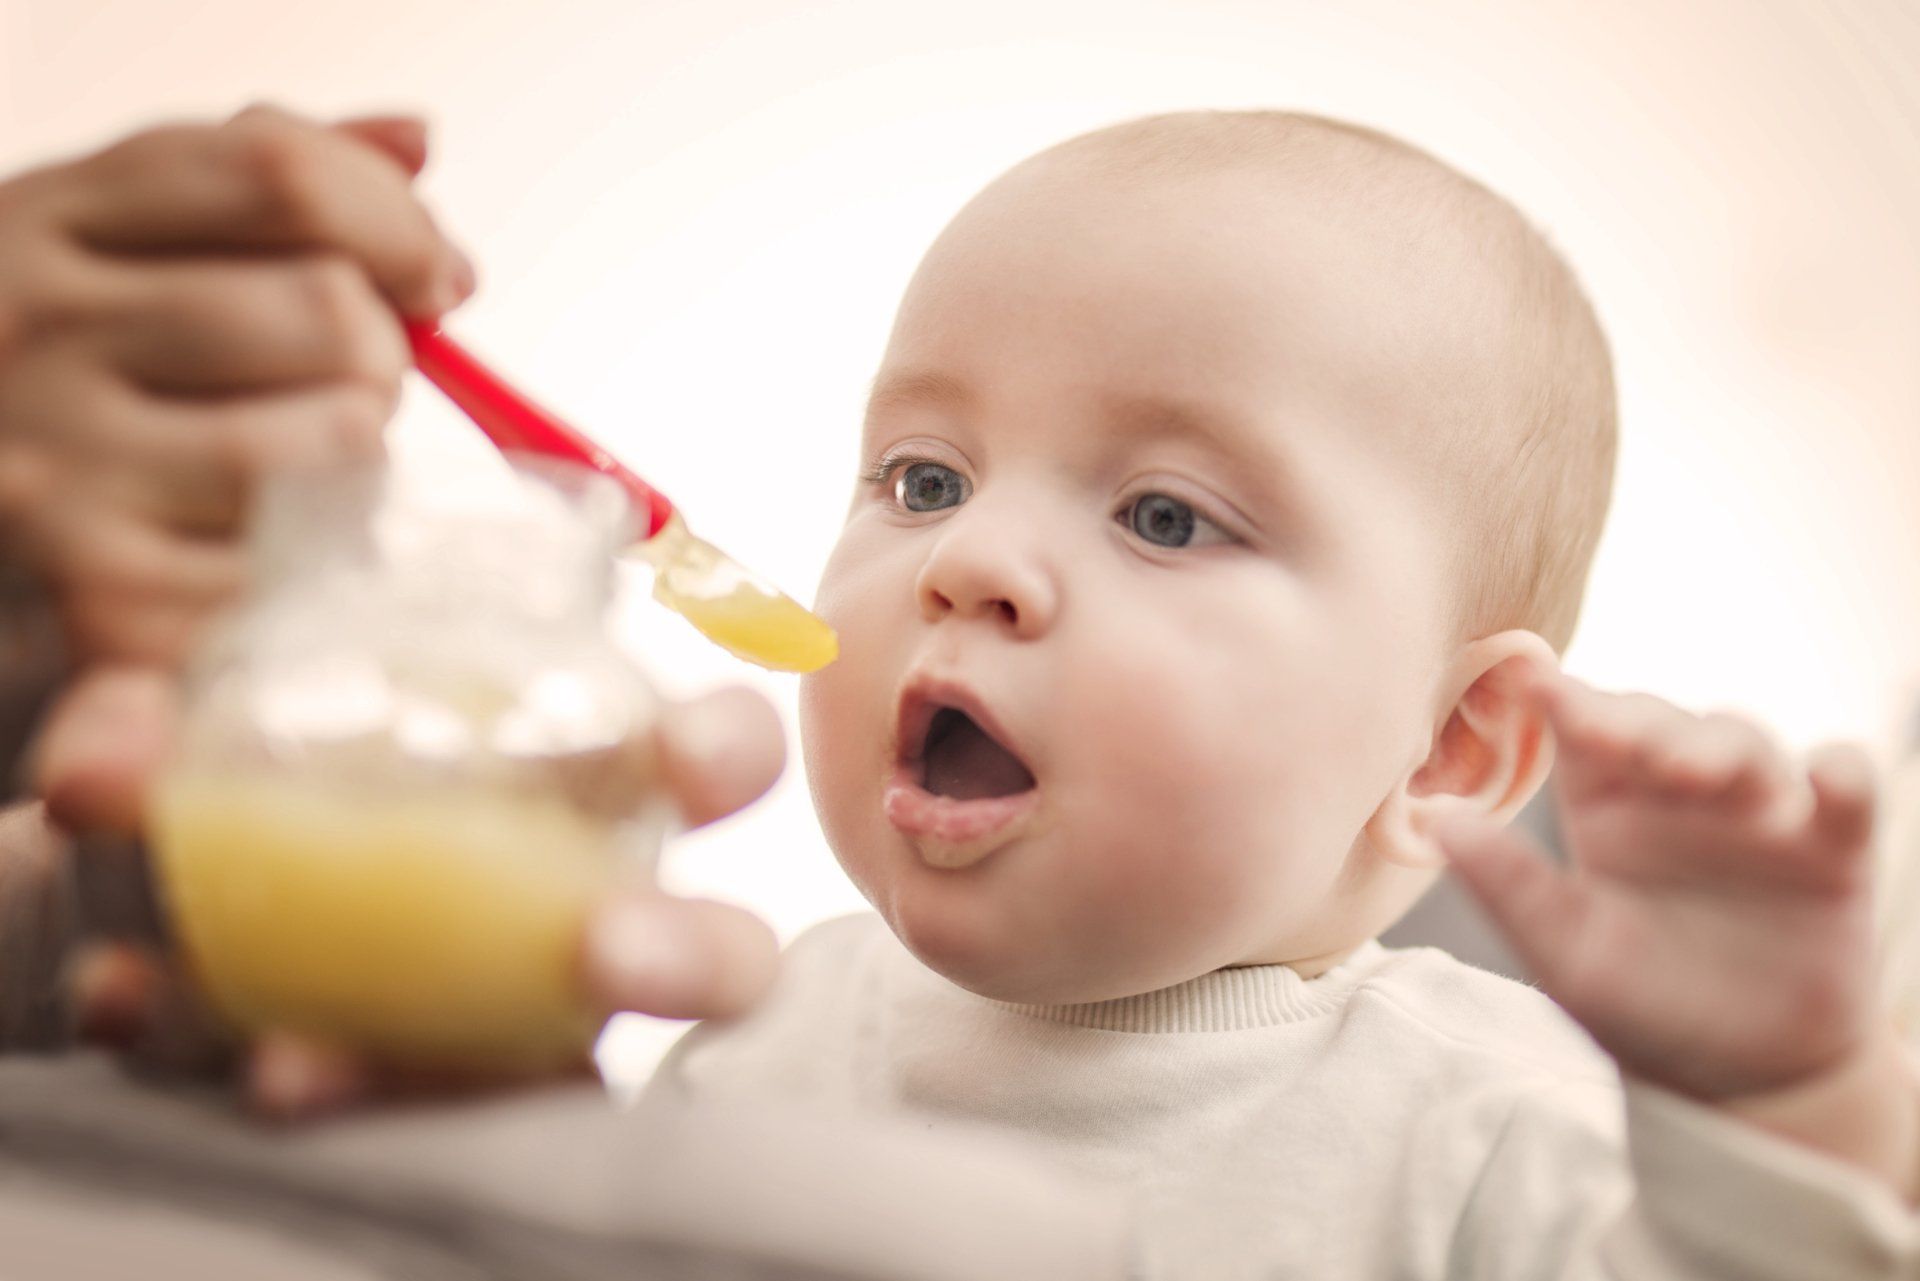 baby consuming food